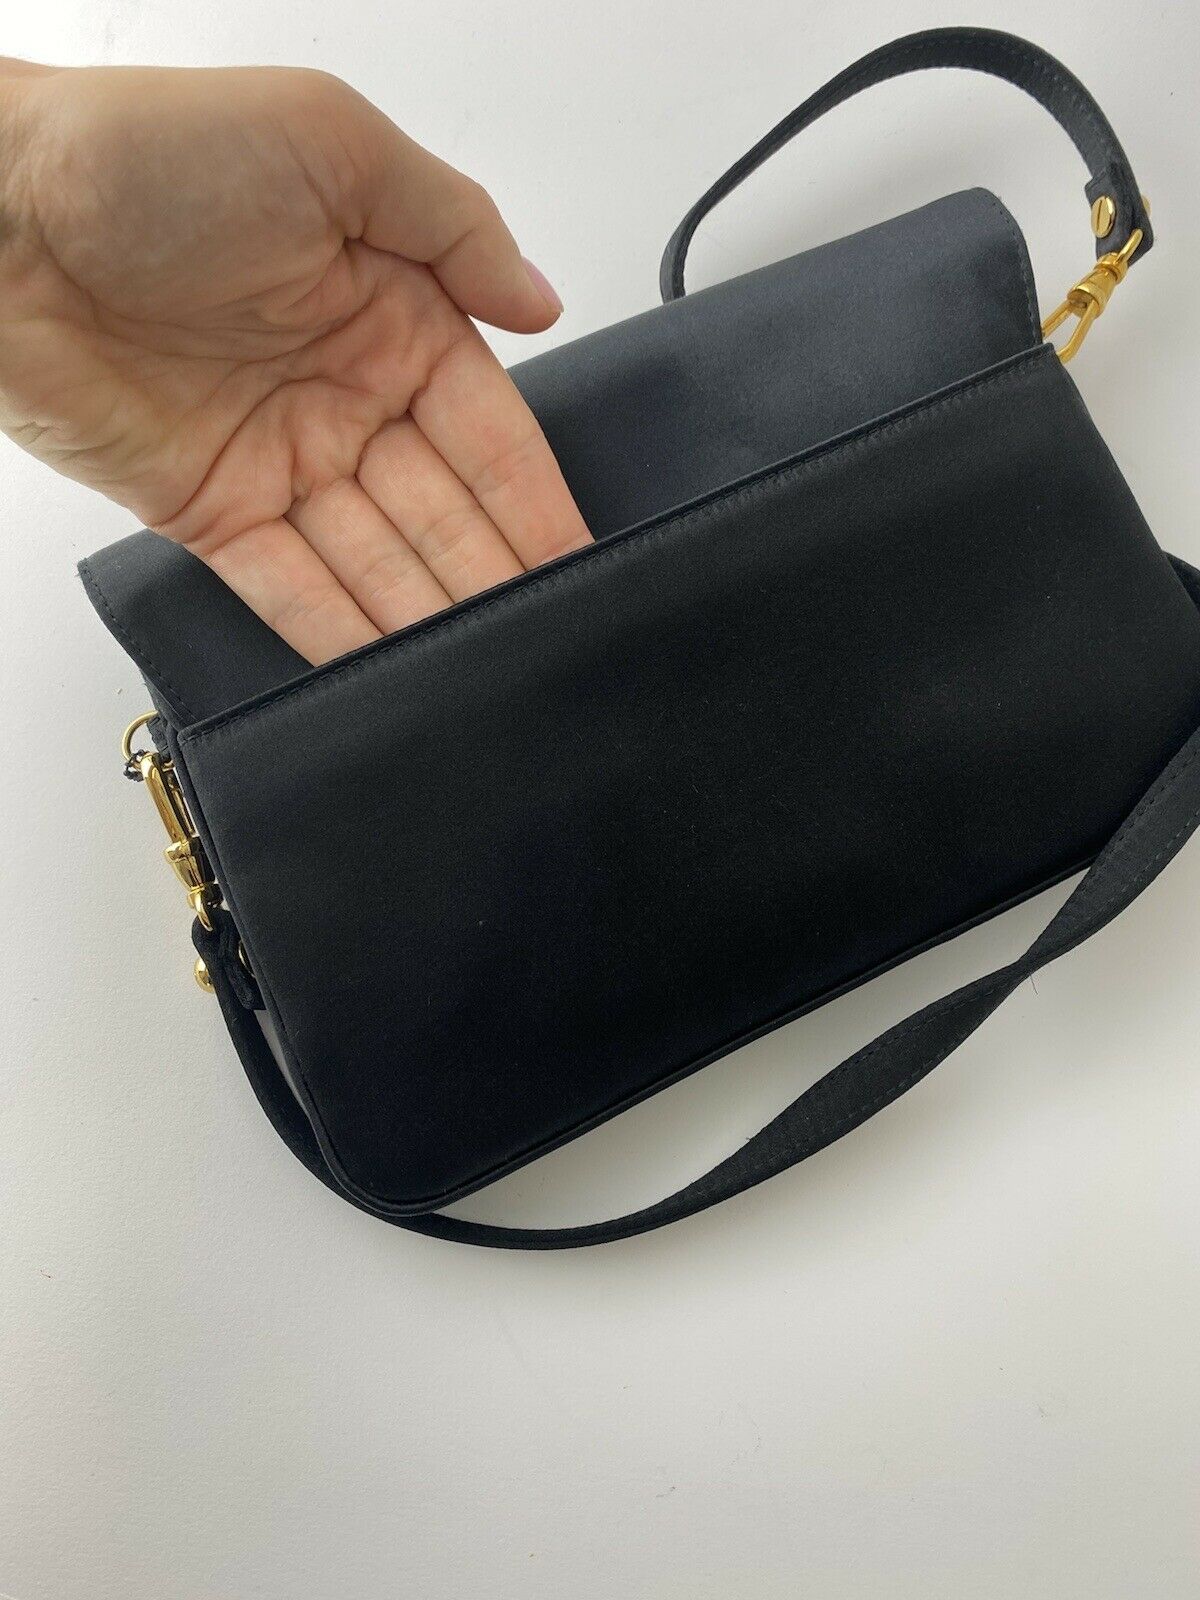 Christian Lacroix New Very Rare Black Satin Shoulder Bag Clutch Bag Handbag Made in Italy